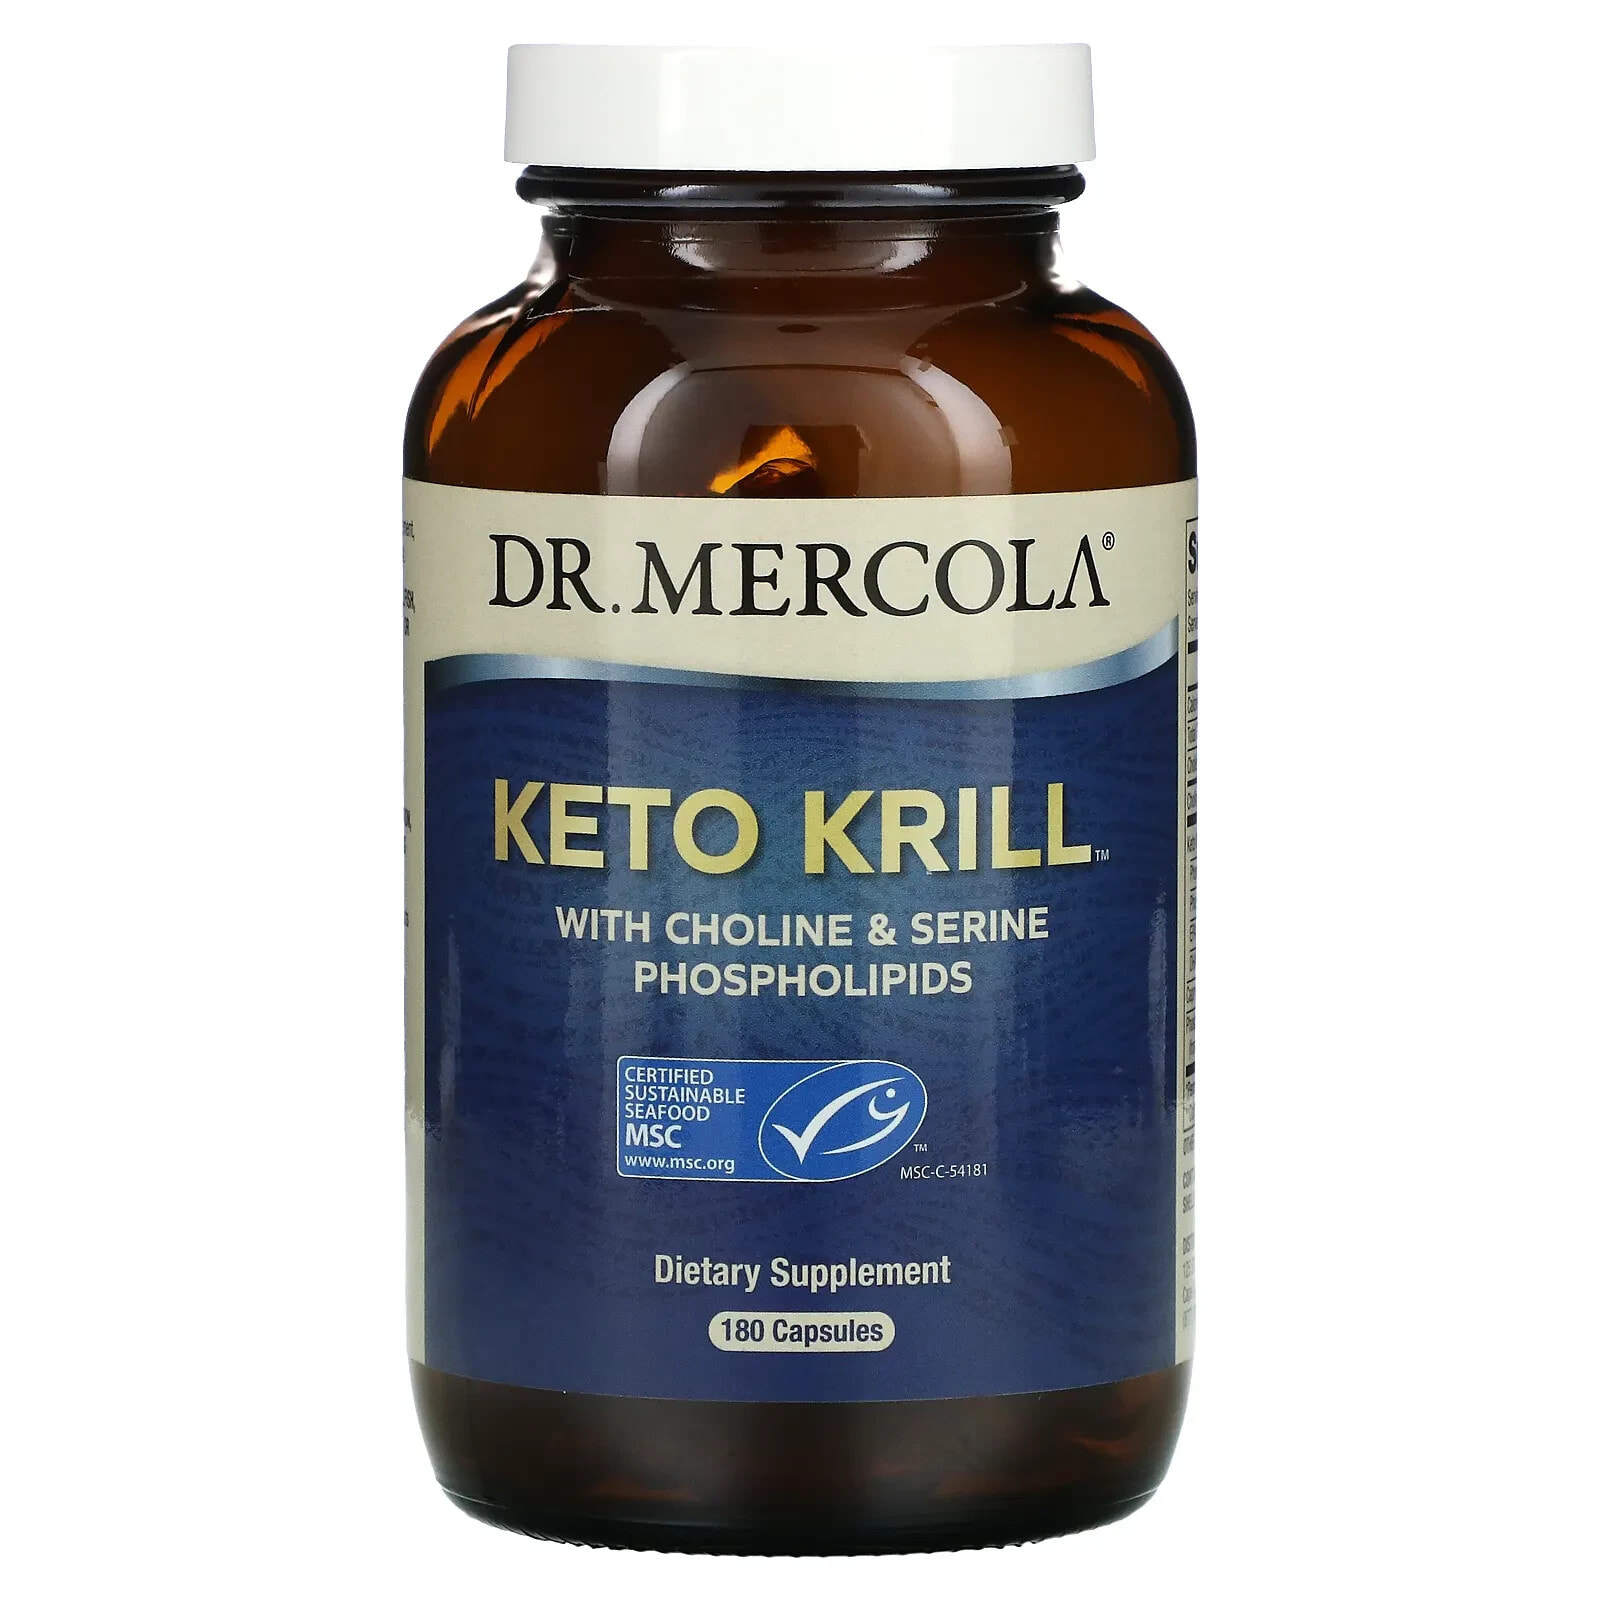 ДР. Меркола, Keto Krill, криль с фосфолипидами холина и серина, 60 капсул